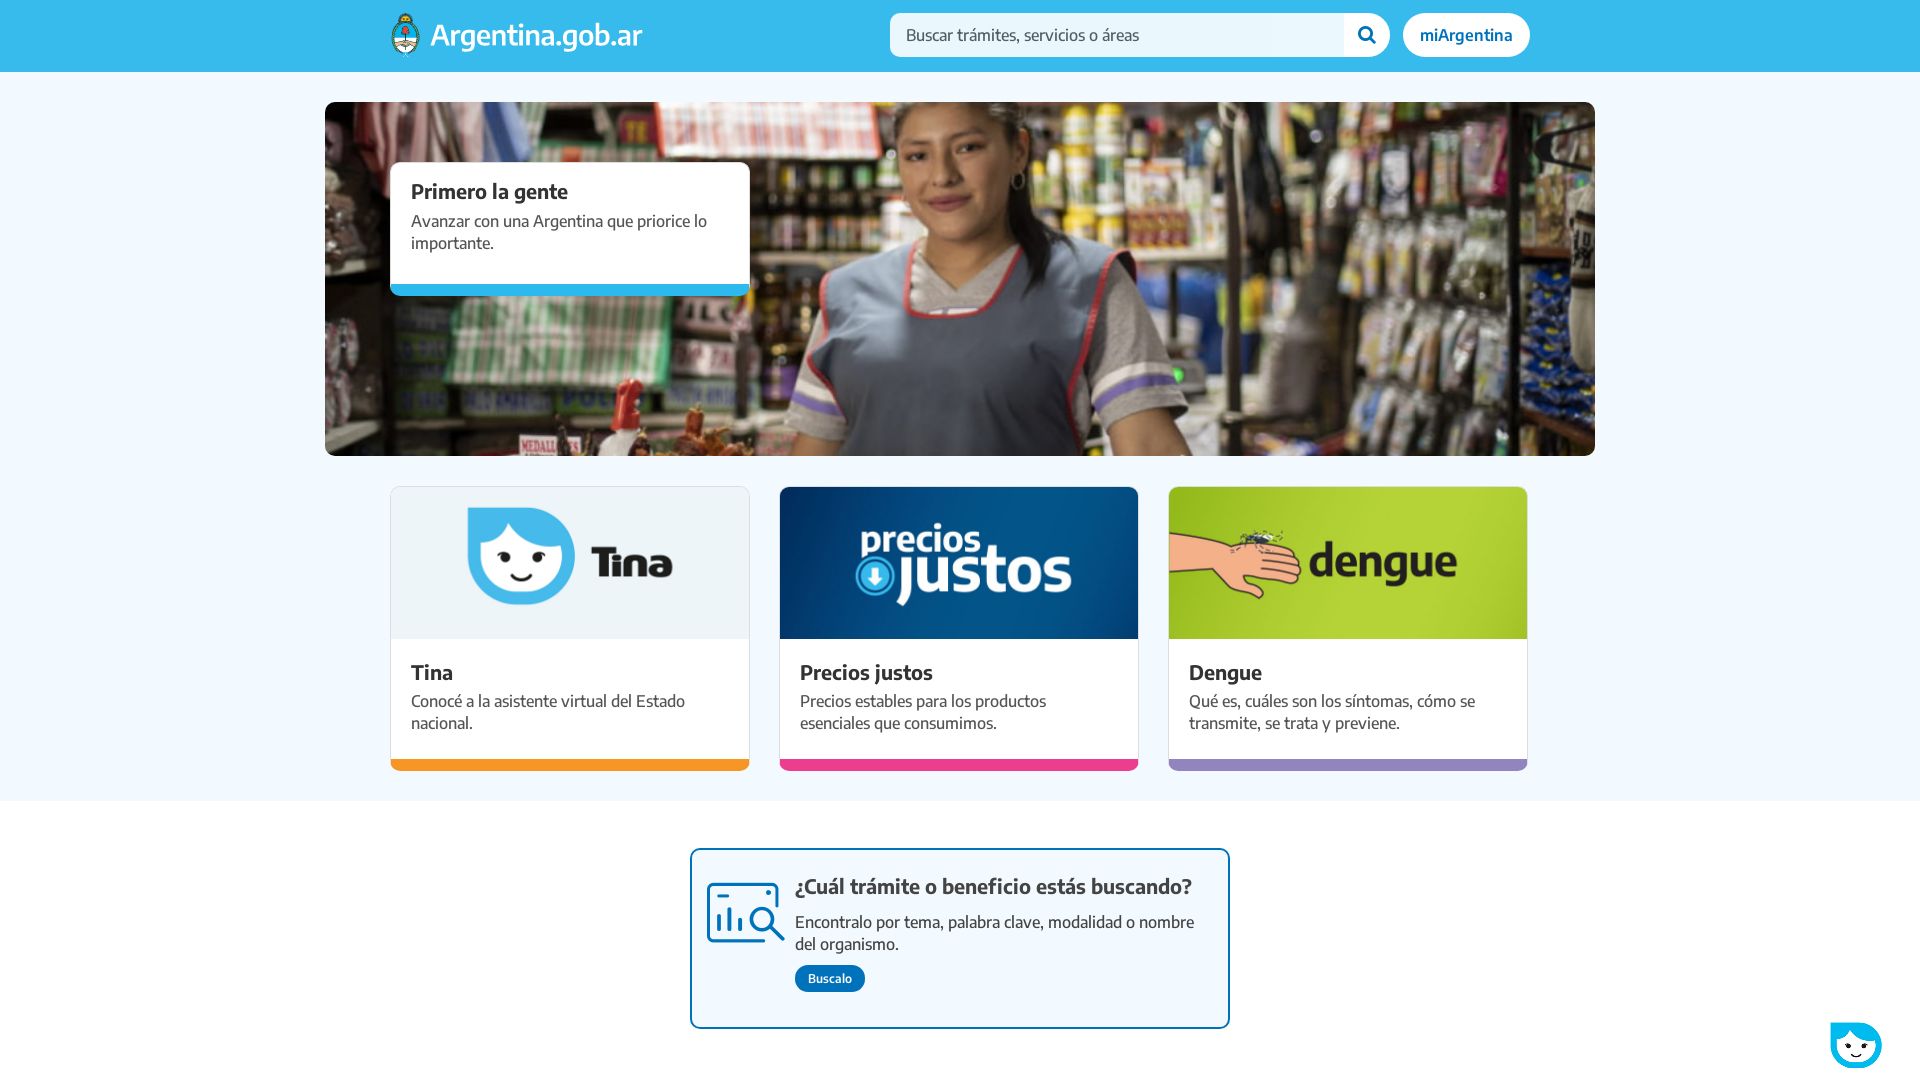 Website status argentina.gob.ar is   ONLINE